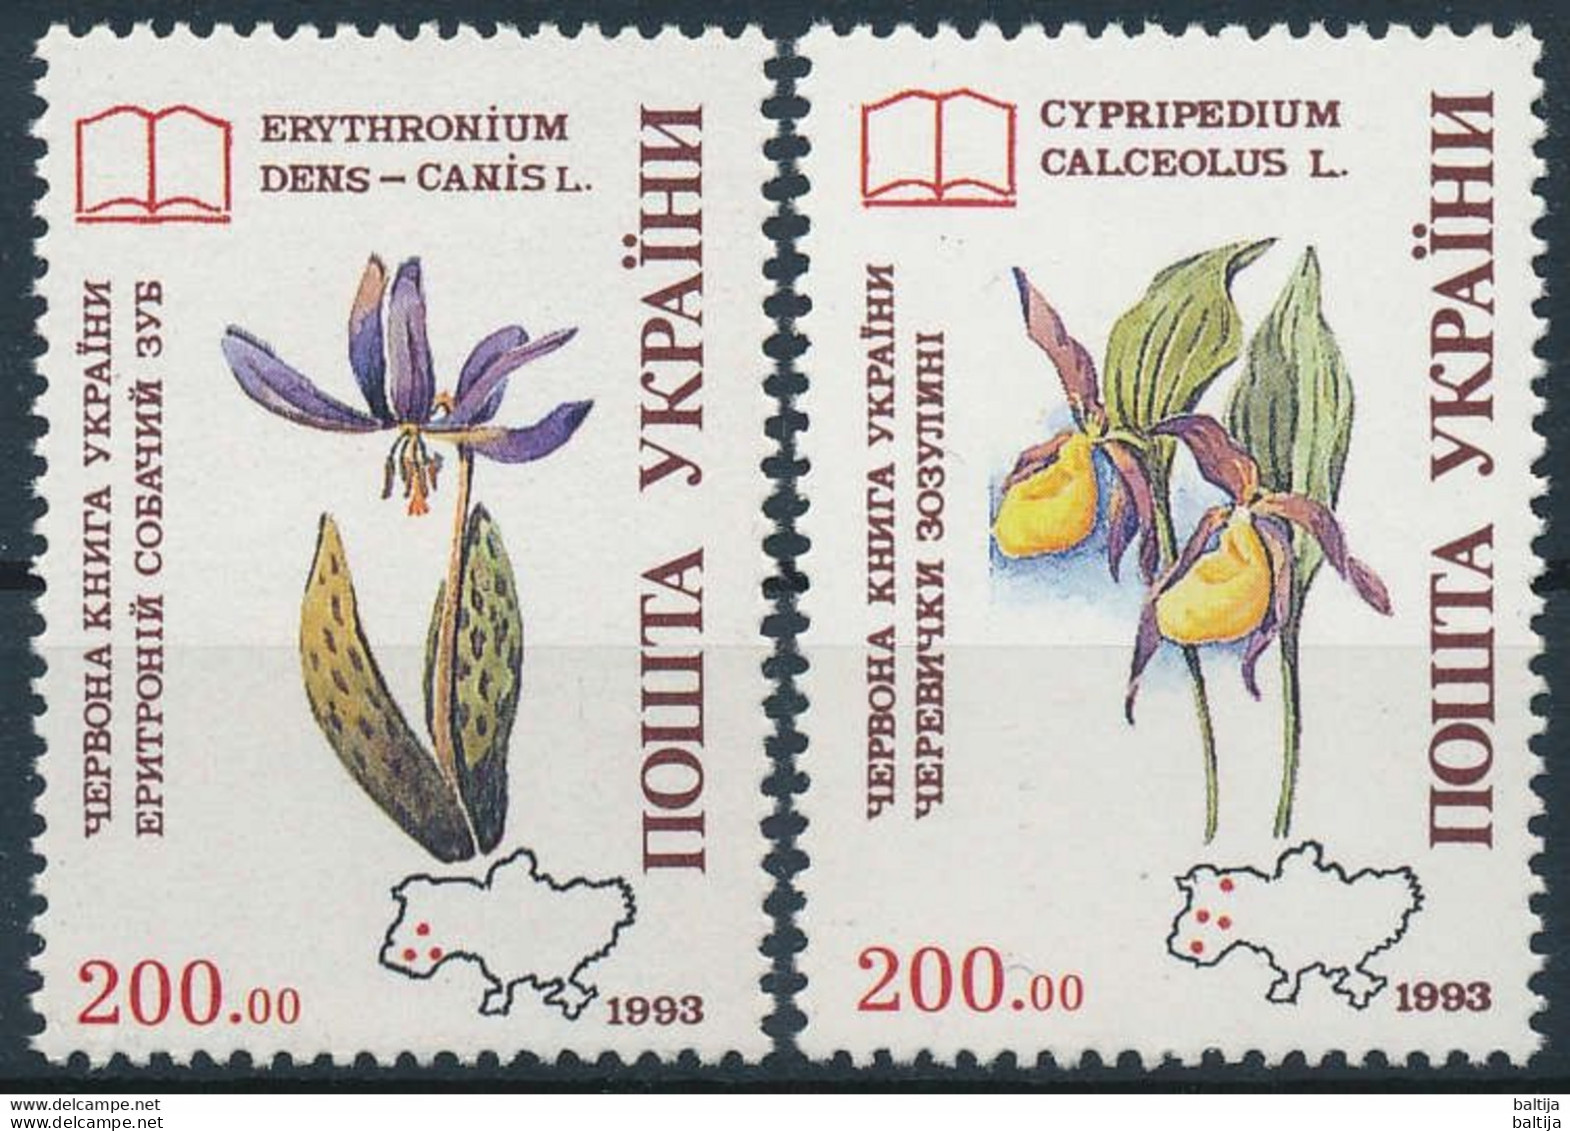 Ukraine, Mi 113-114 ** MNH / Plant, Flower, Orchid, Erythronium Dens-canis, Cypripedium Calceolus - Orchidee